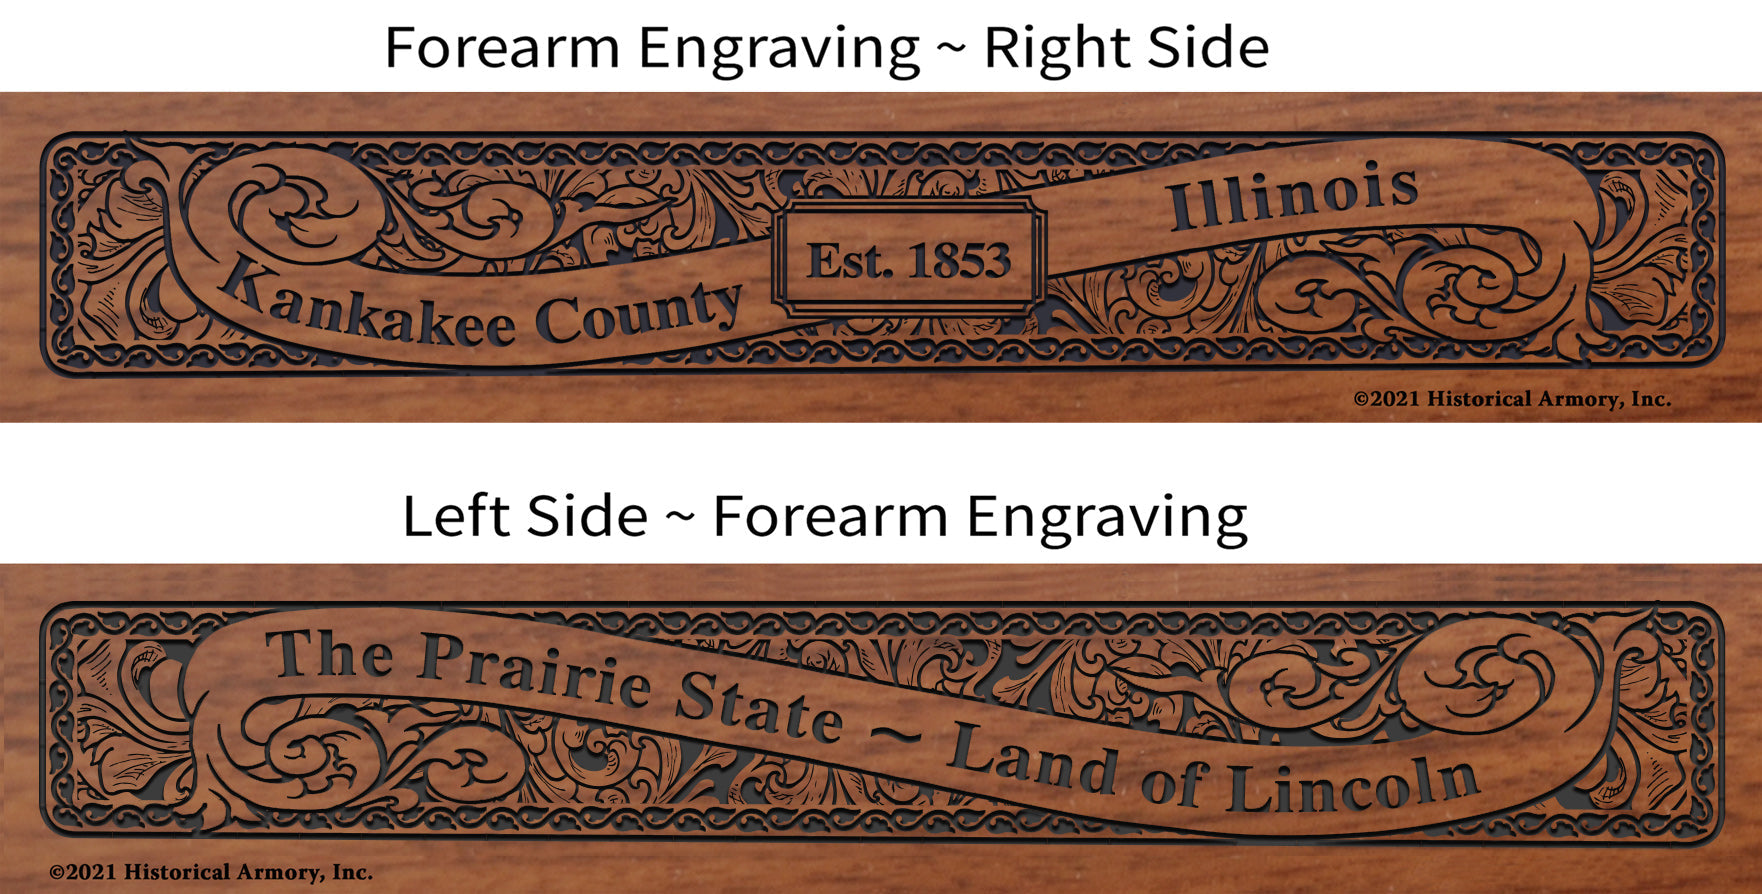 Kankakee County Illinois Establishment and Motto History Engraved Rifle Forearm